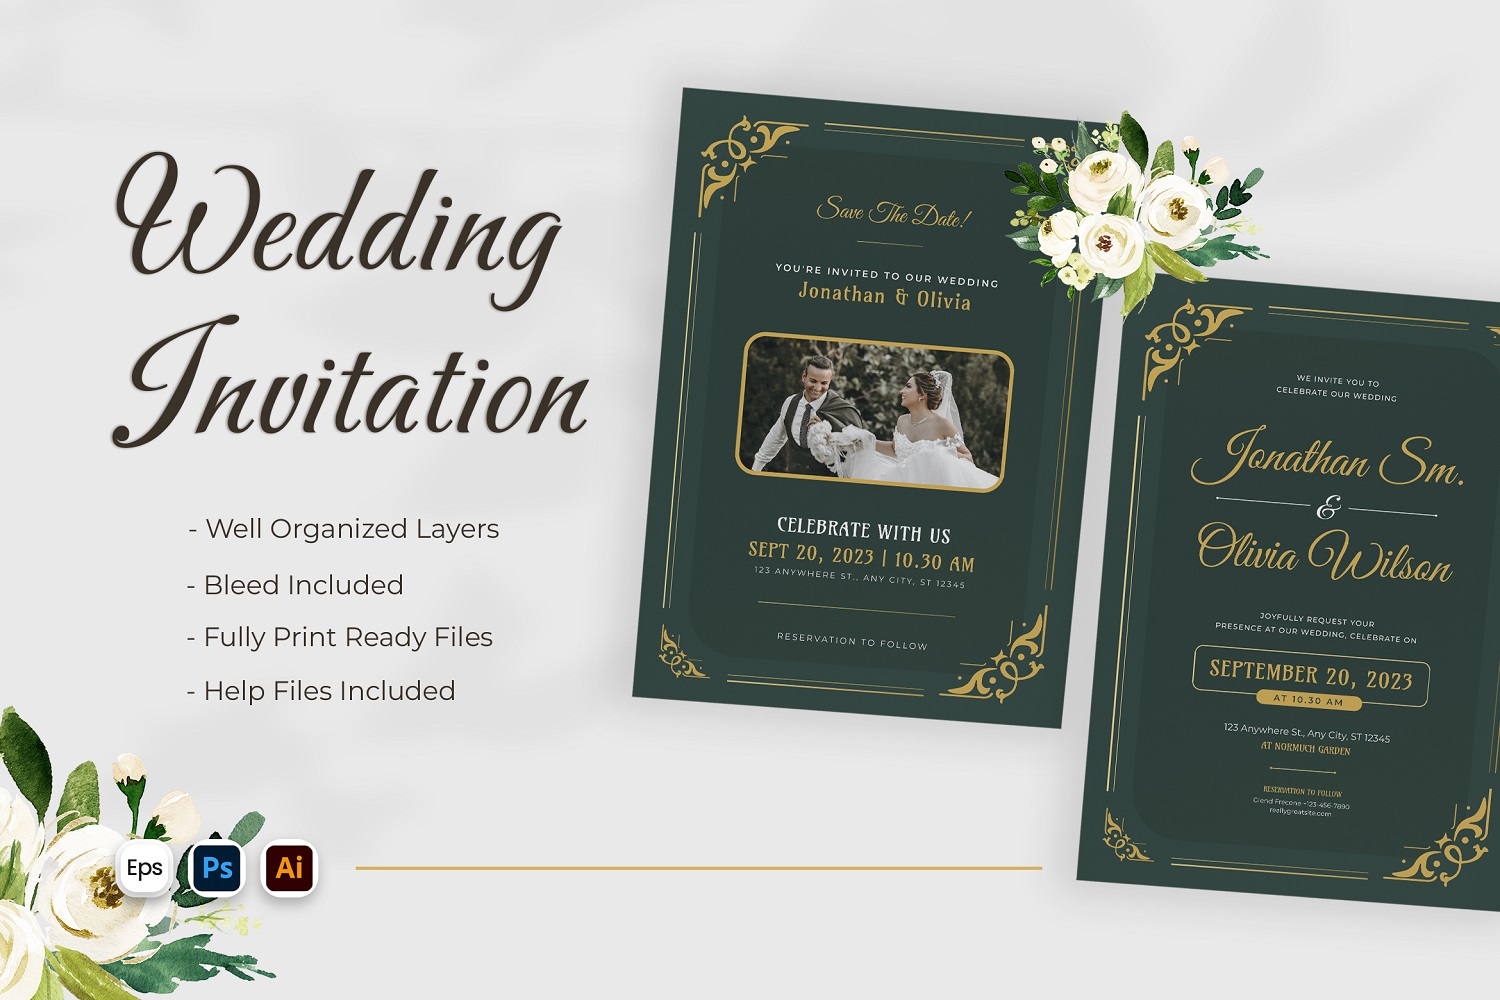 Green Concept Wedding Invitation Template